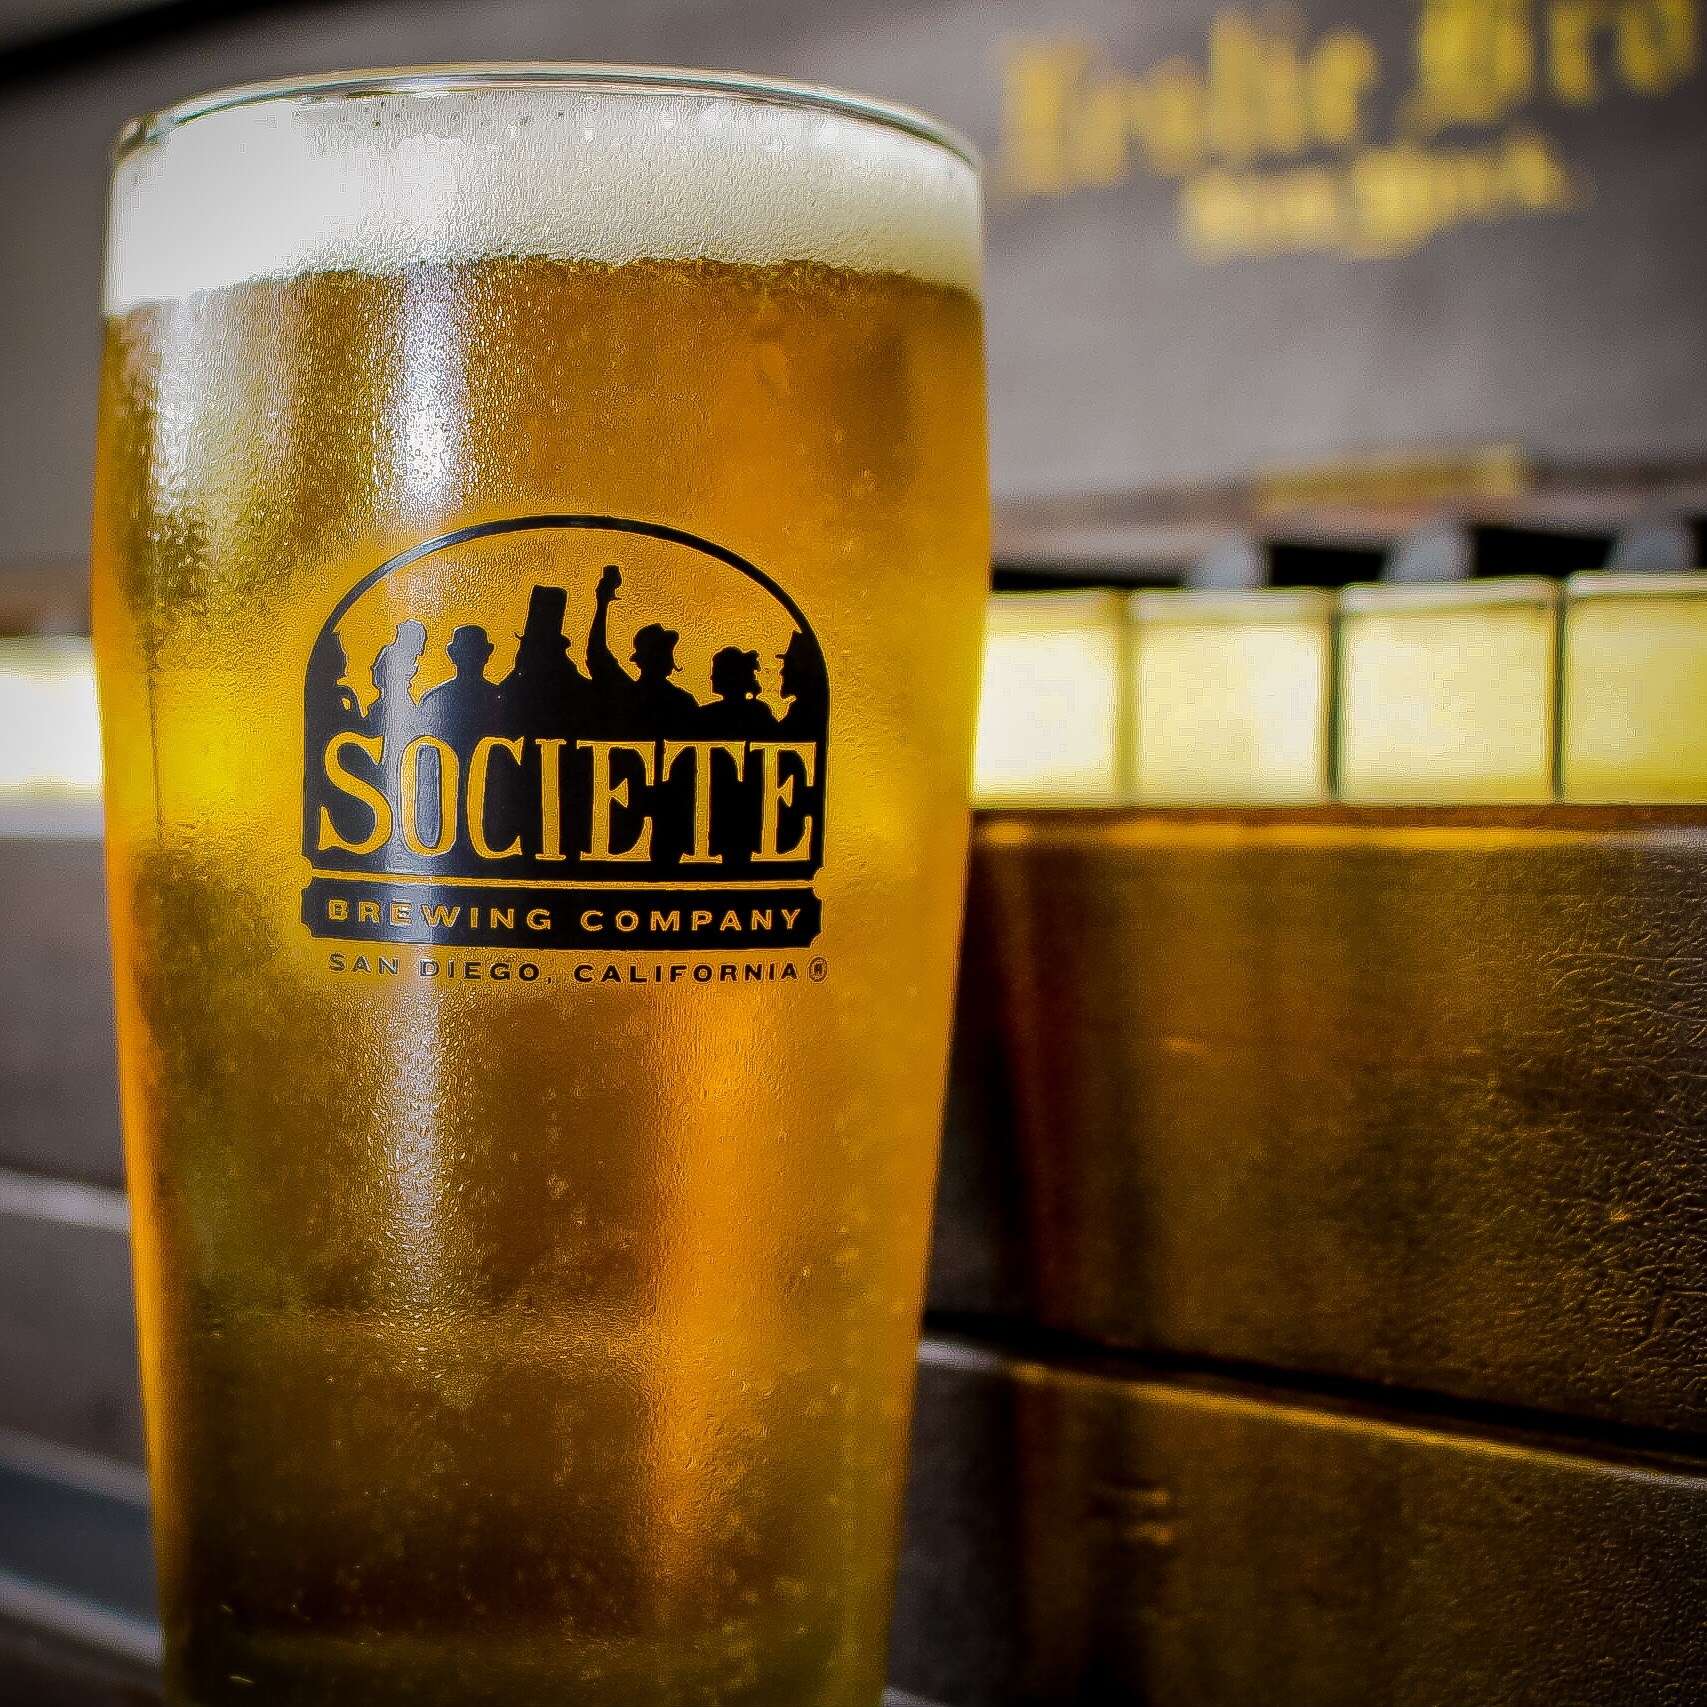 Full glass of Societe pale ale beer